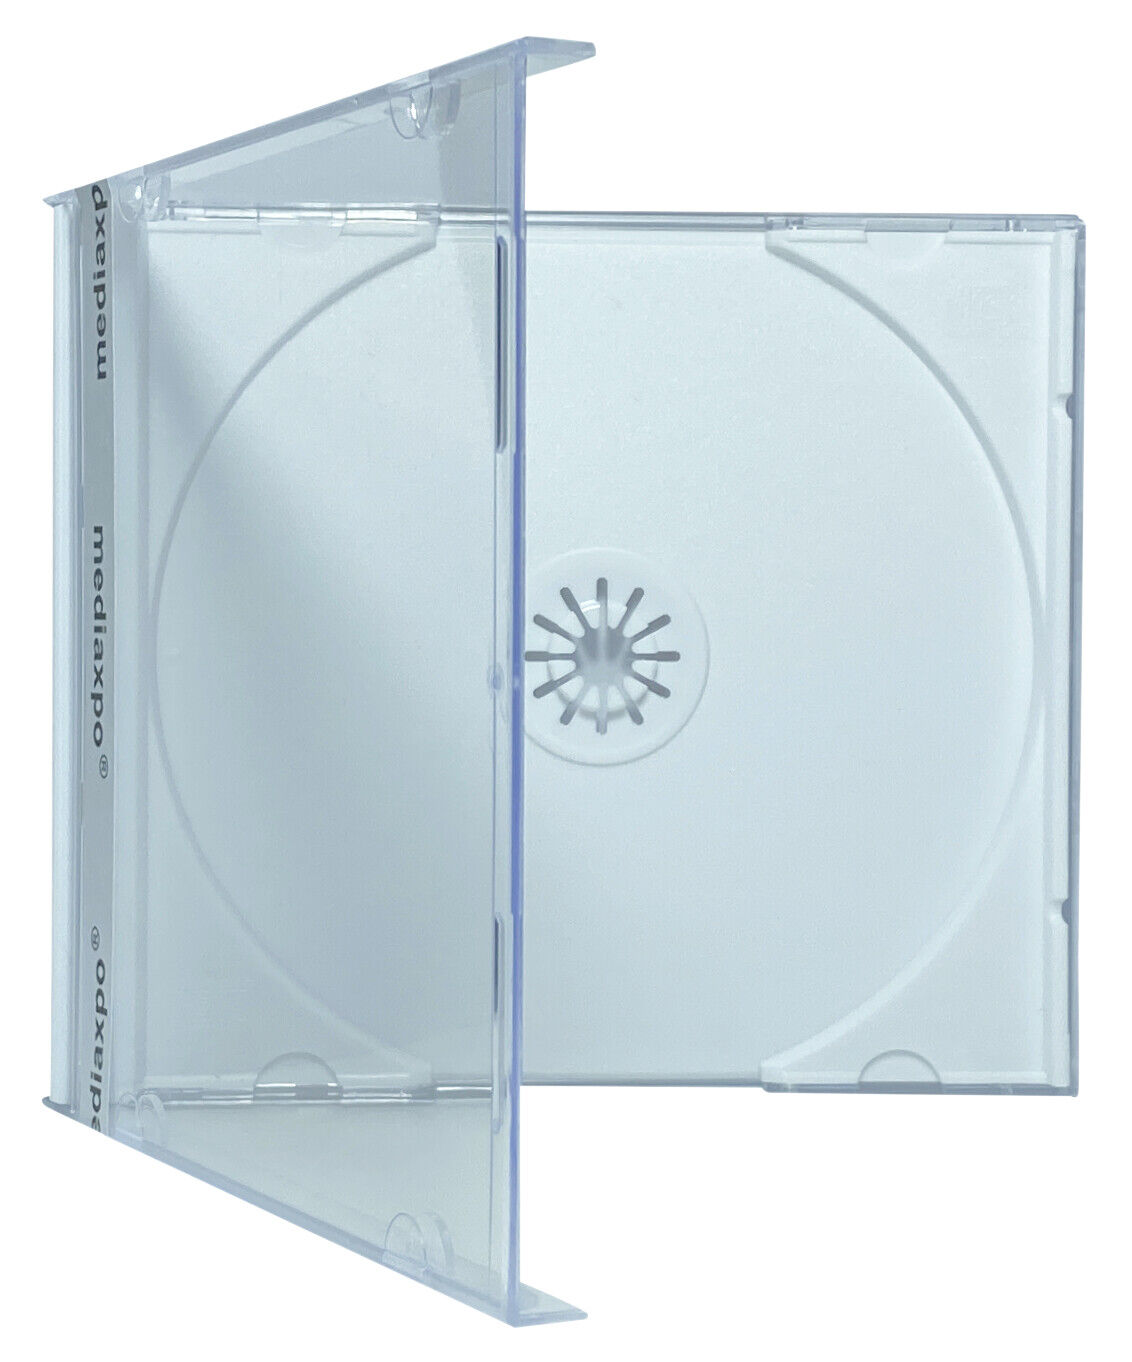 STANDARD White Color CD Jewel Case Lot